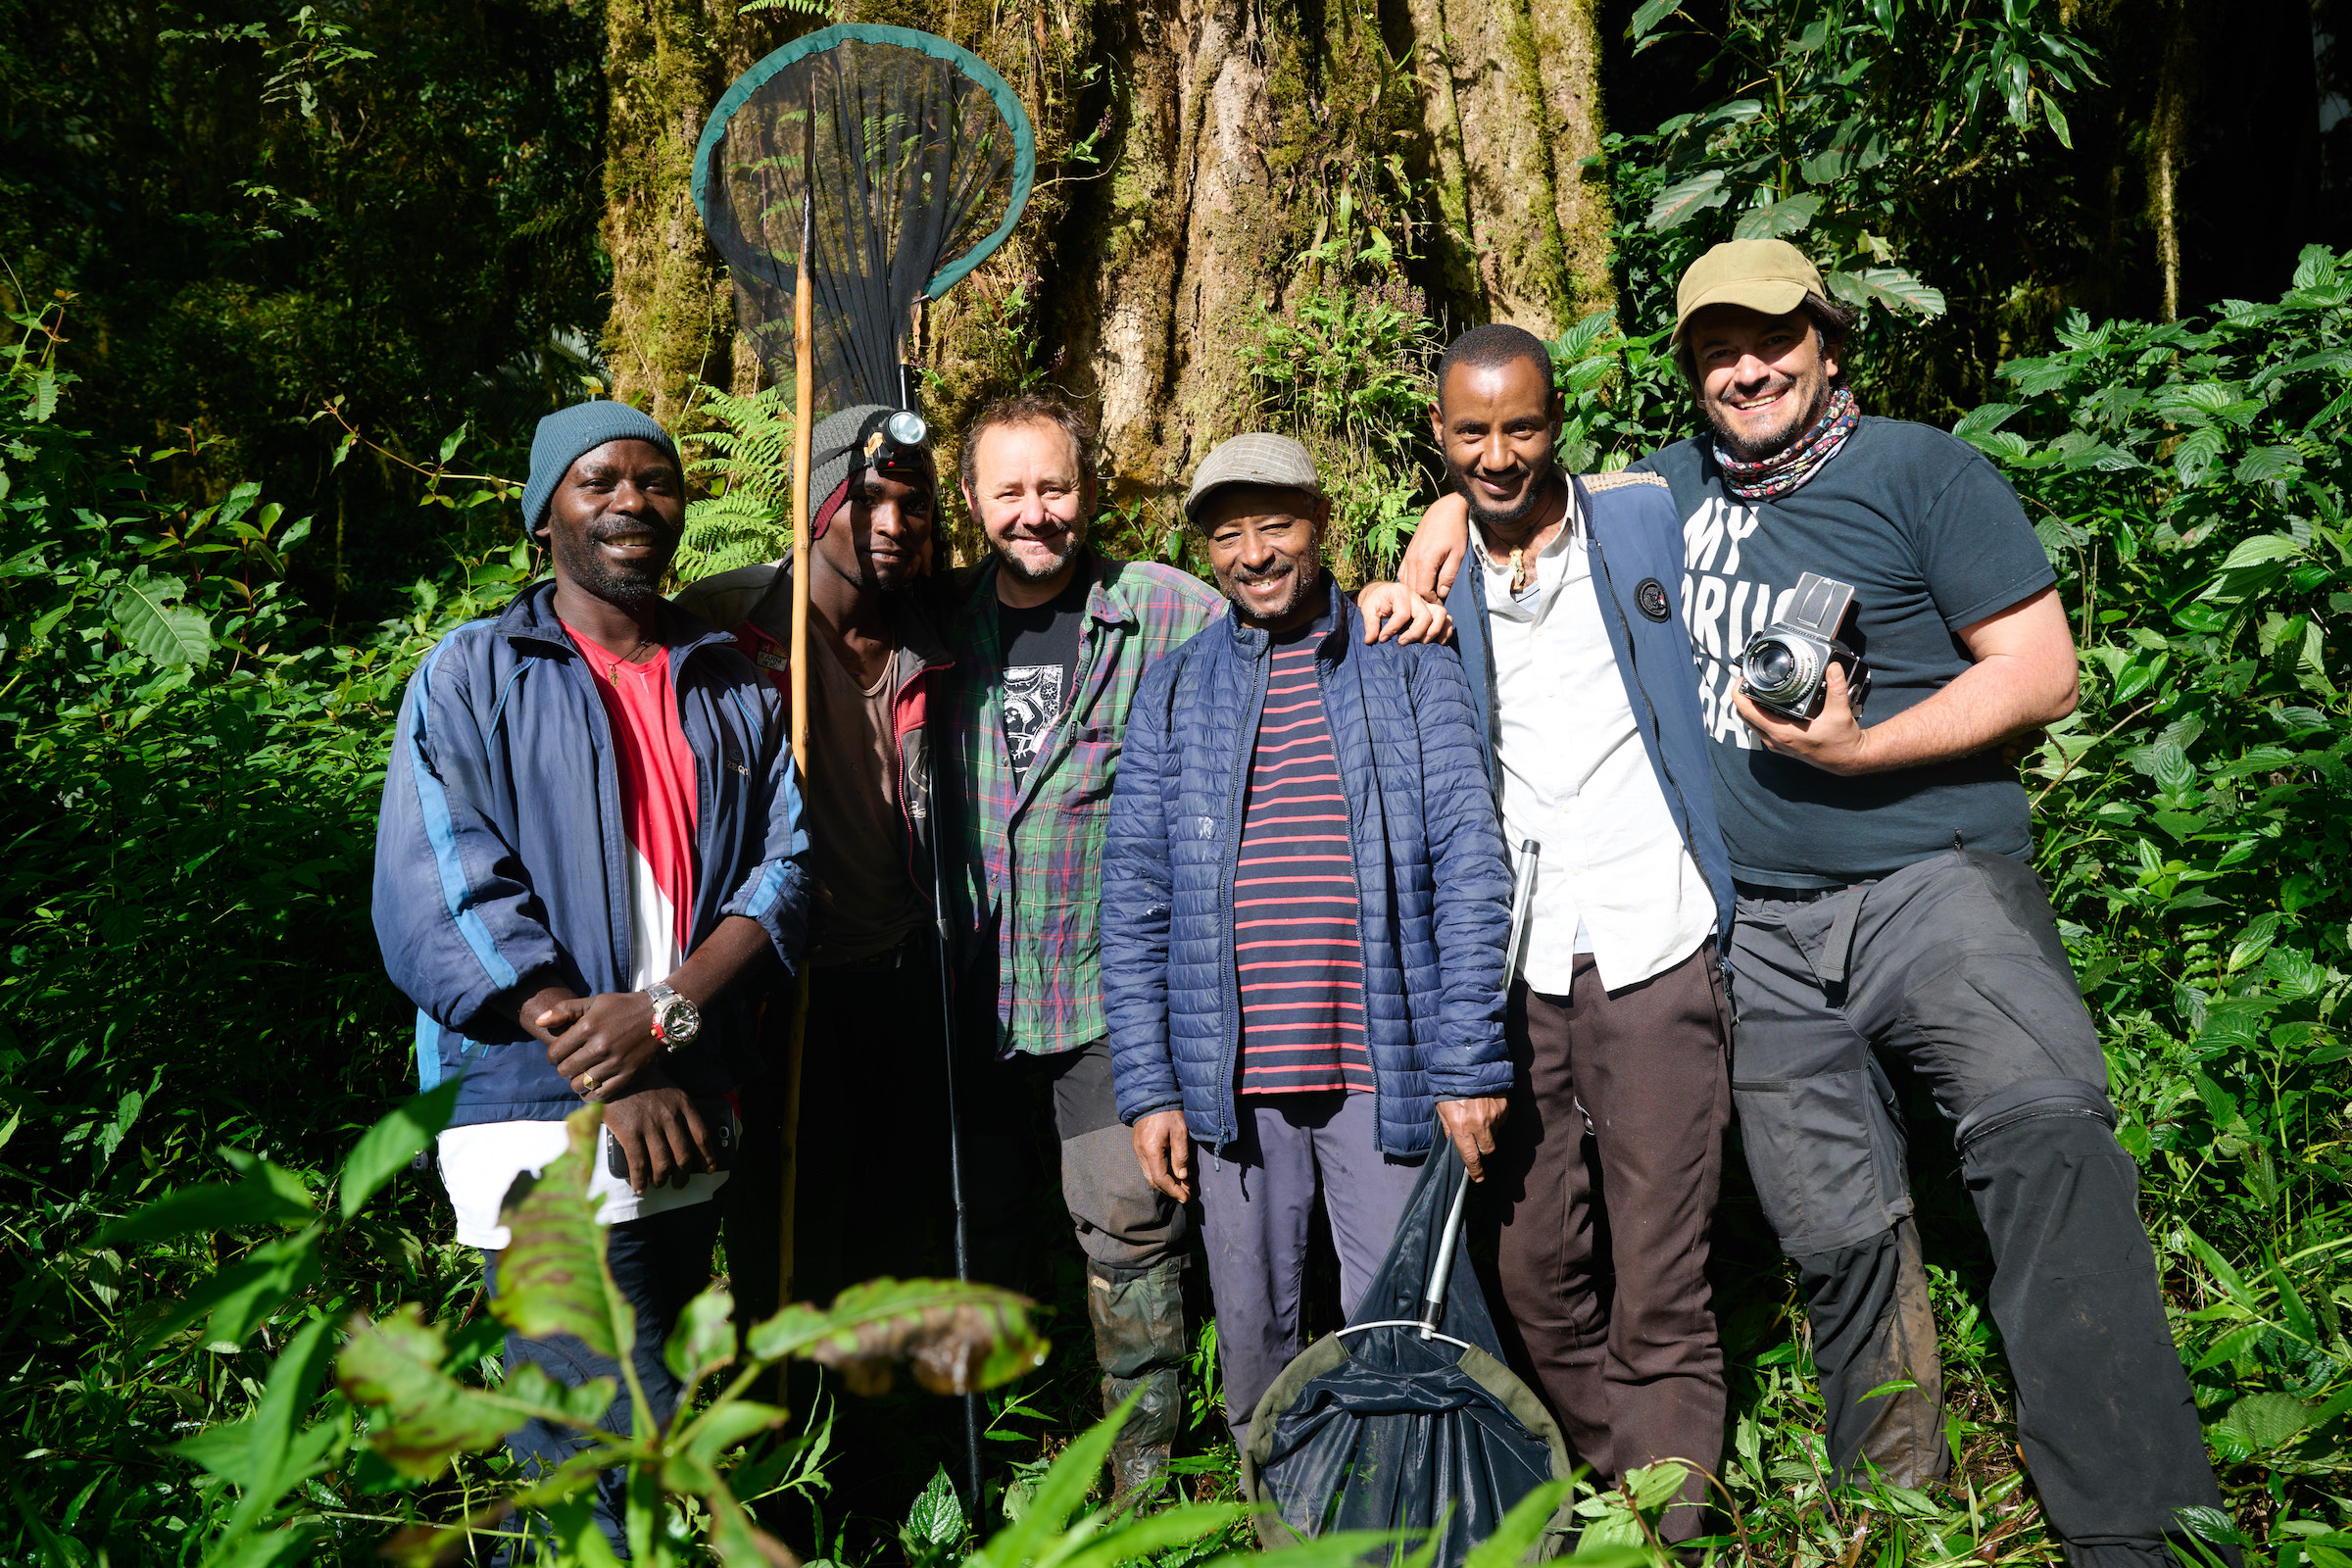 Group photo of the expedition team in Gura Ferda, southwest Ethiopia, May-June 2022. Image courtesy Christophe Bernier.